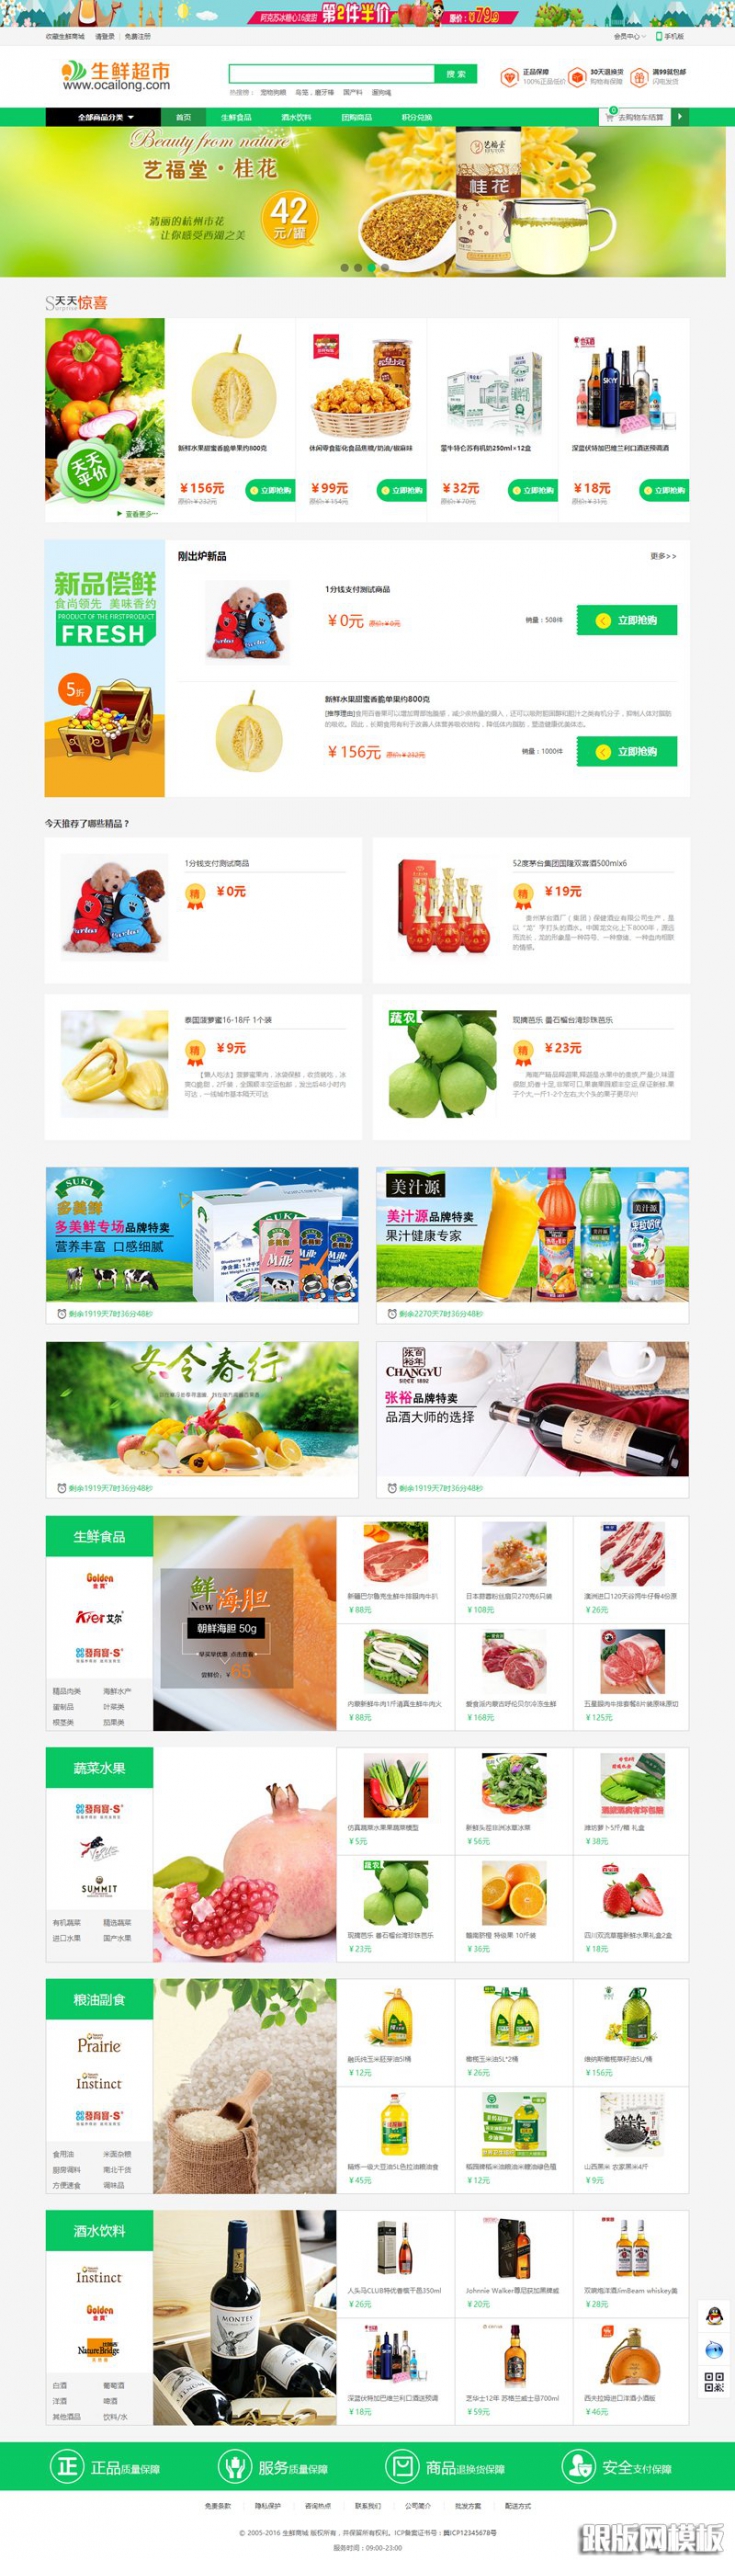 Ecshop生鲜超市农产品网站整站源码 PC+WAP+微信分销商城 微信支付+短信功能插图